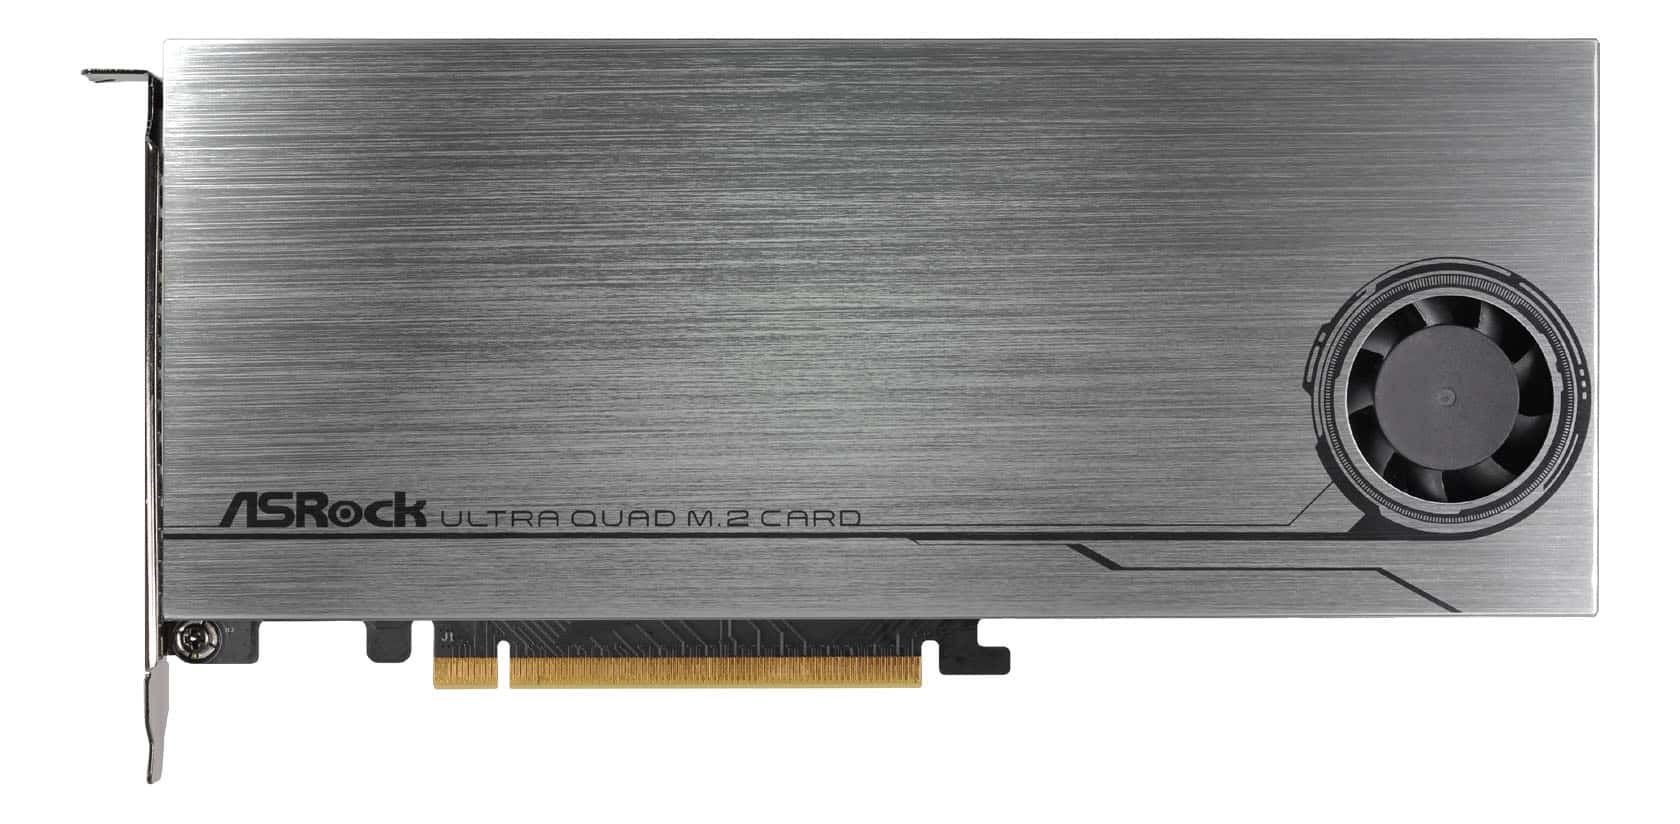 Ultra Quad M.2, la nueva tarjeta de expansión de ASRock